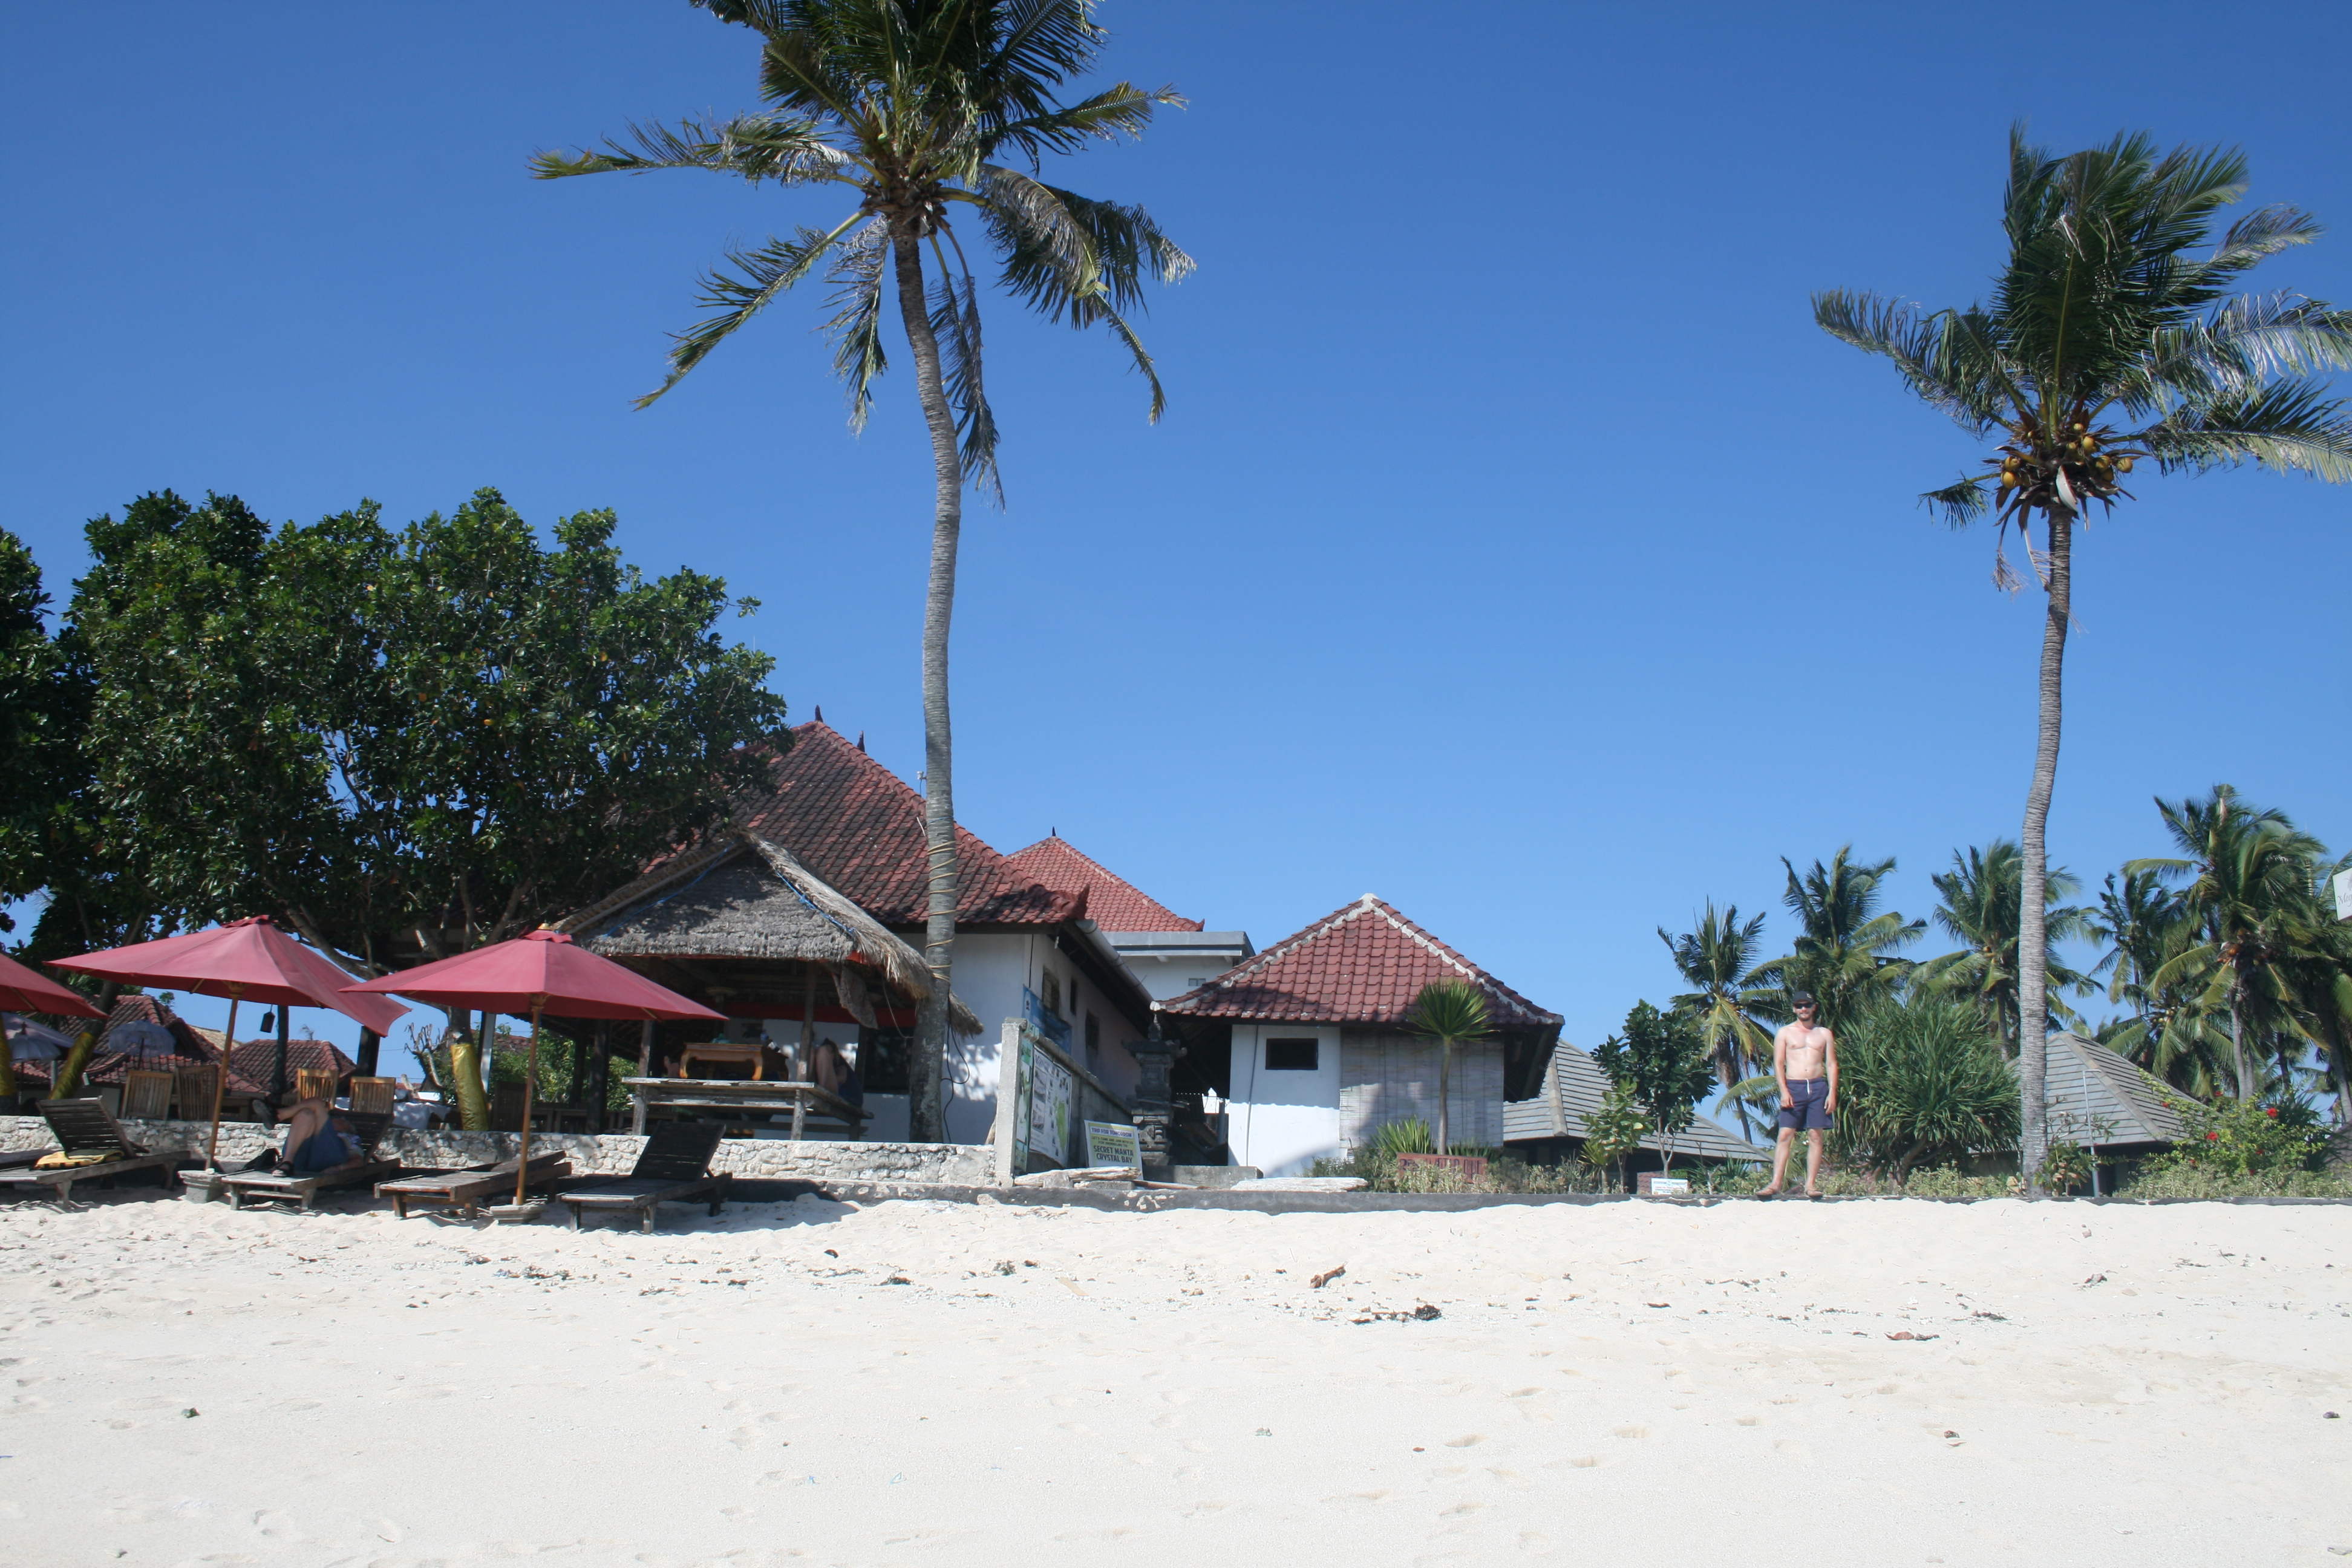 Hotel and restaurant in Lembongan